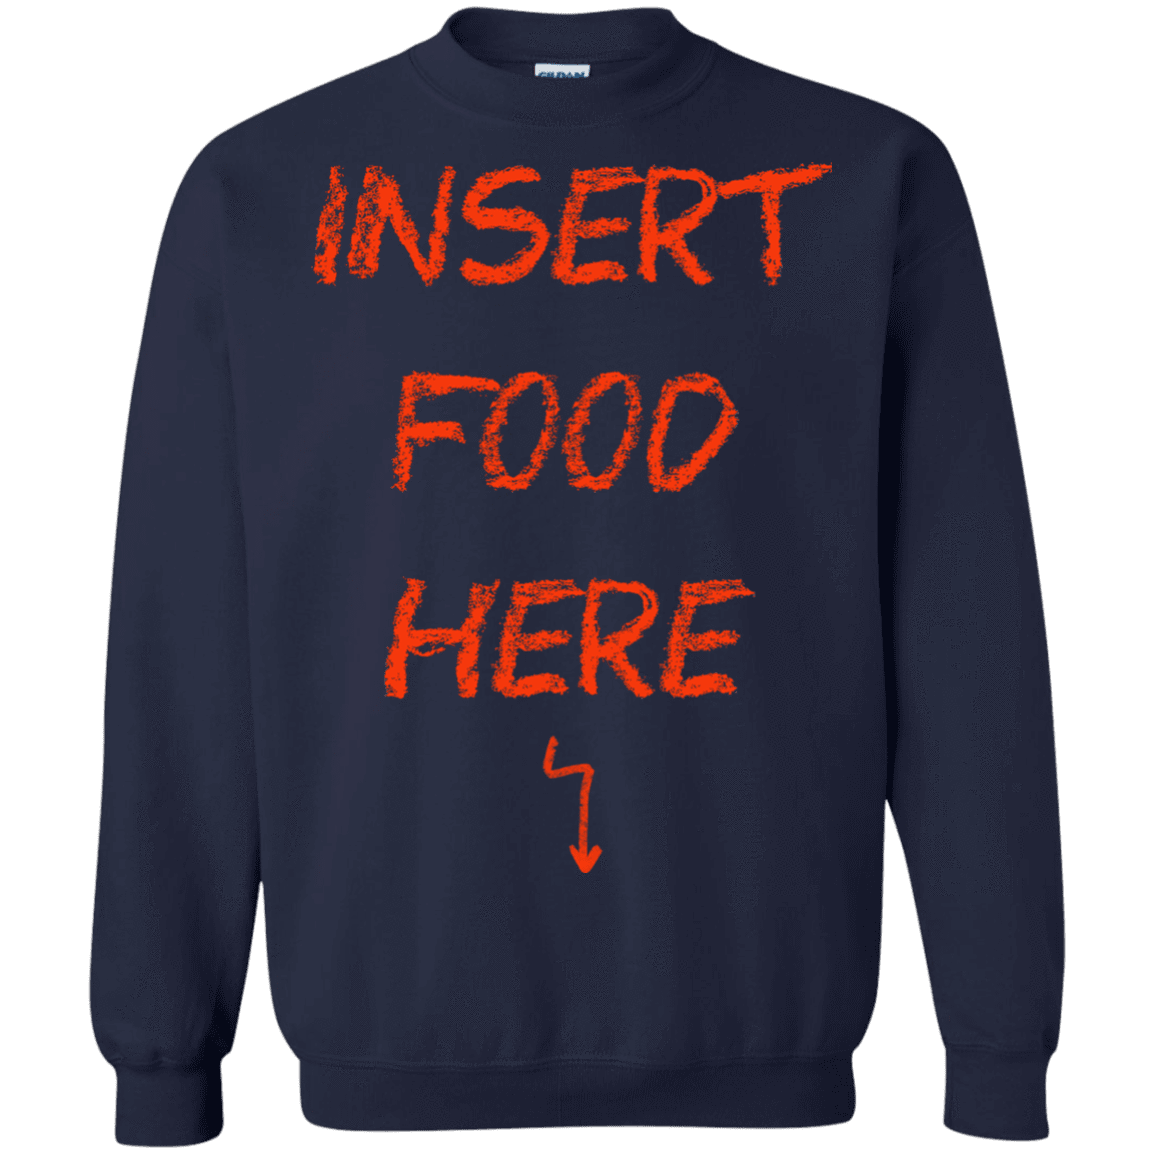 Sweatshirts Navy / S Insert Food Crewneck Sweatshirt